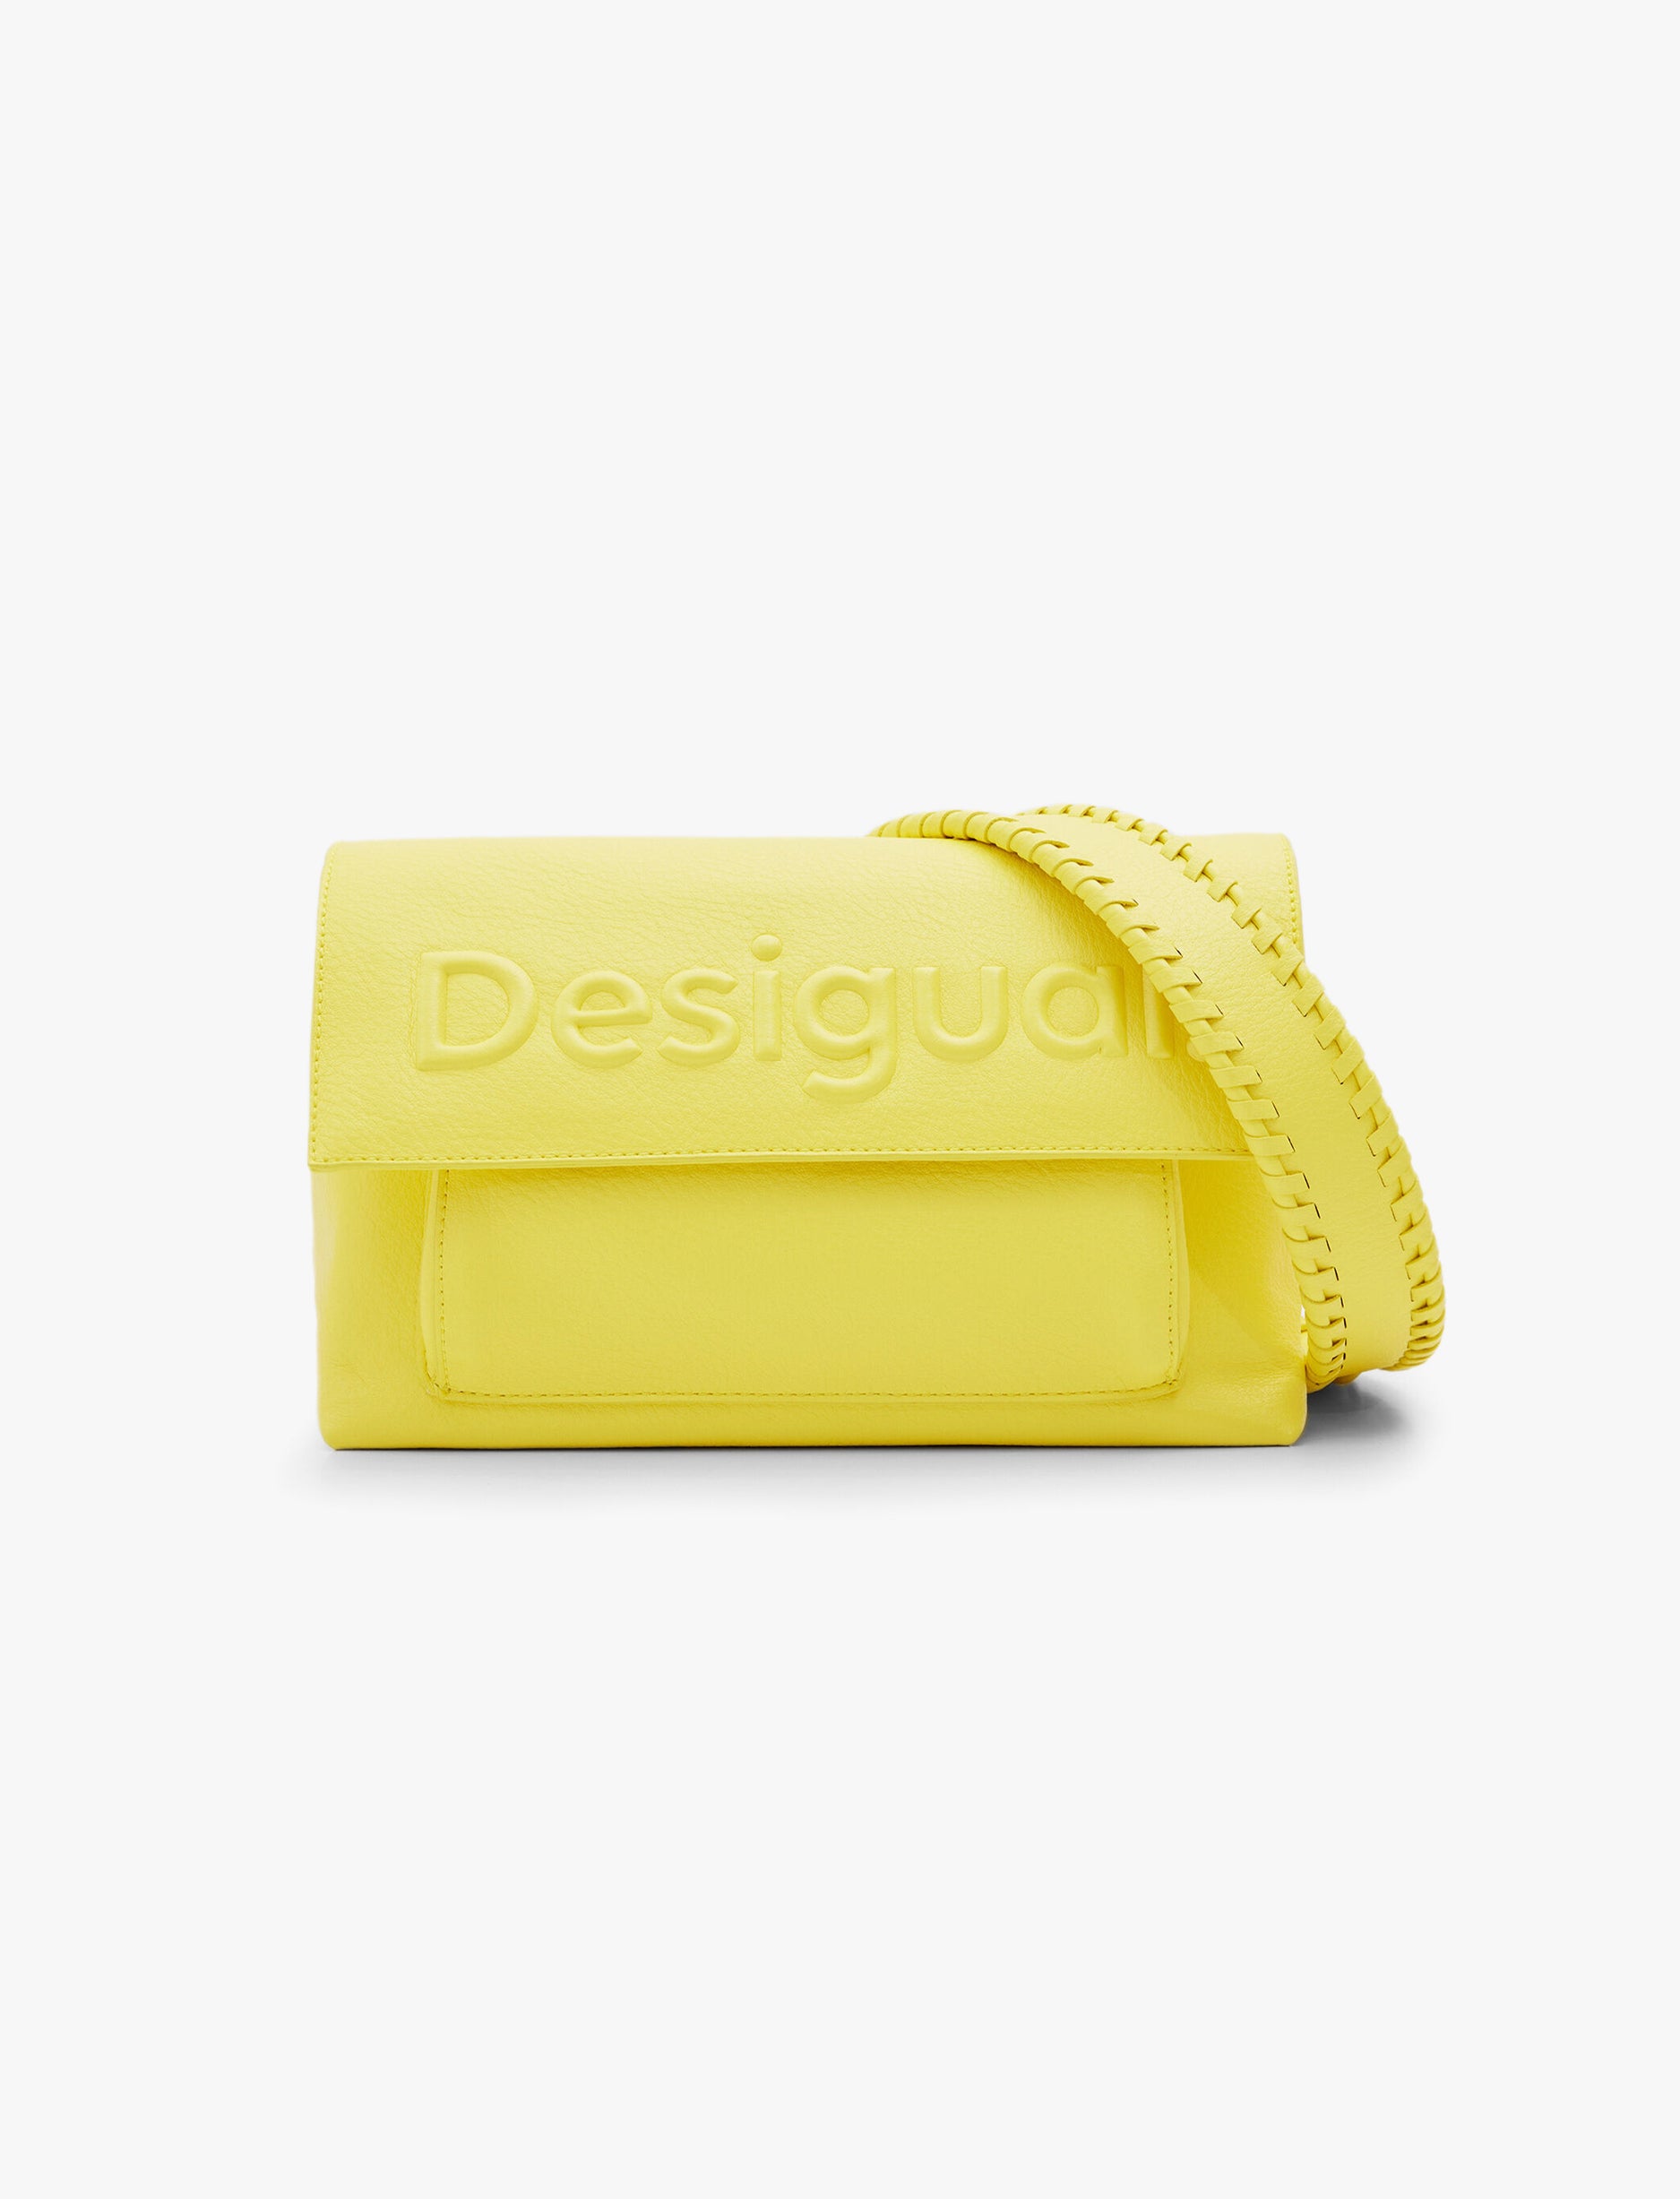 Desigual Bag Half Logo 24 Venecia 2.0 - תיק קרוסבודי בצבע צהוב